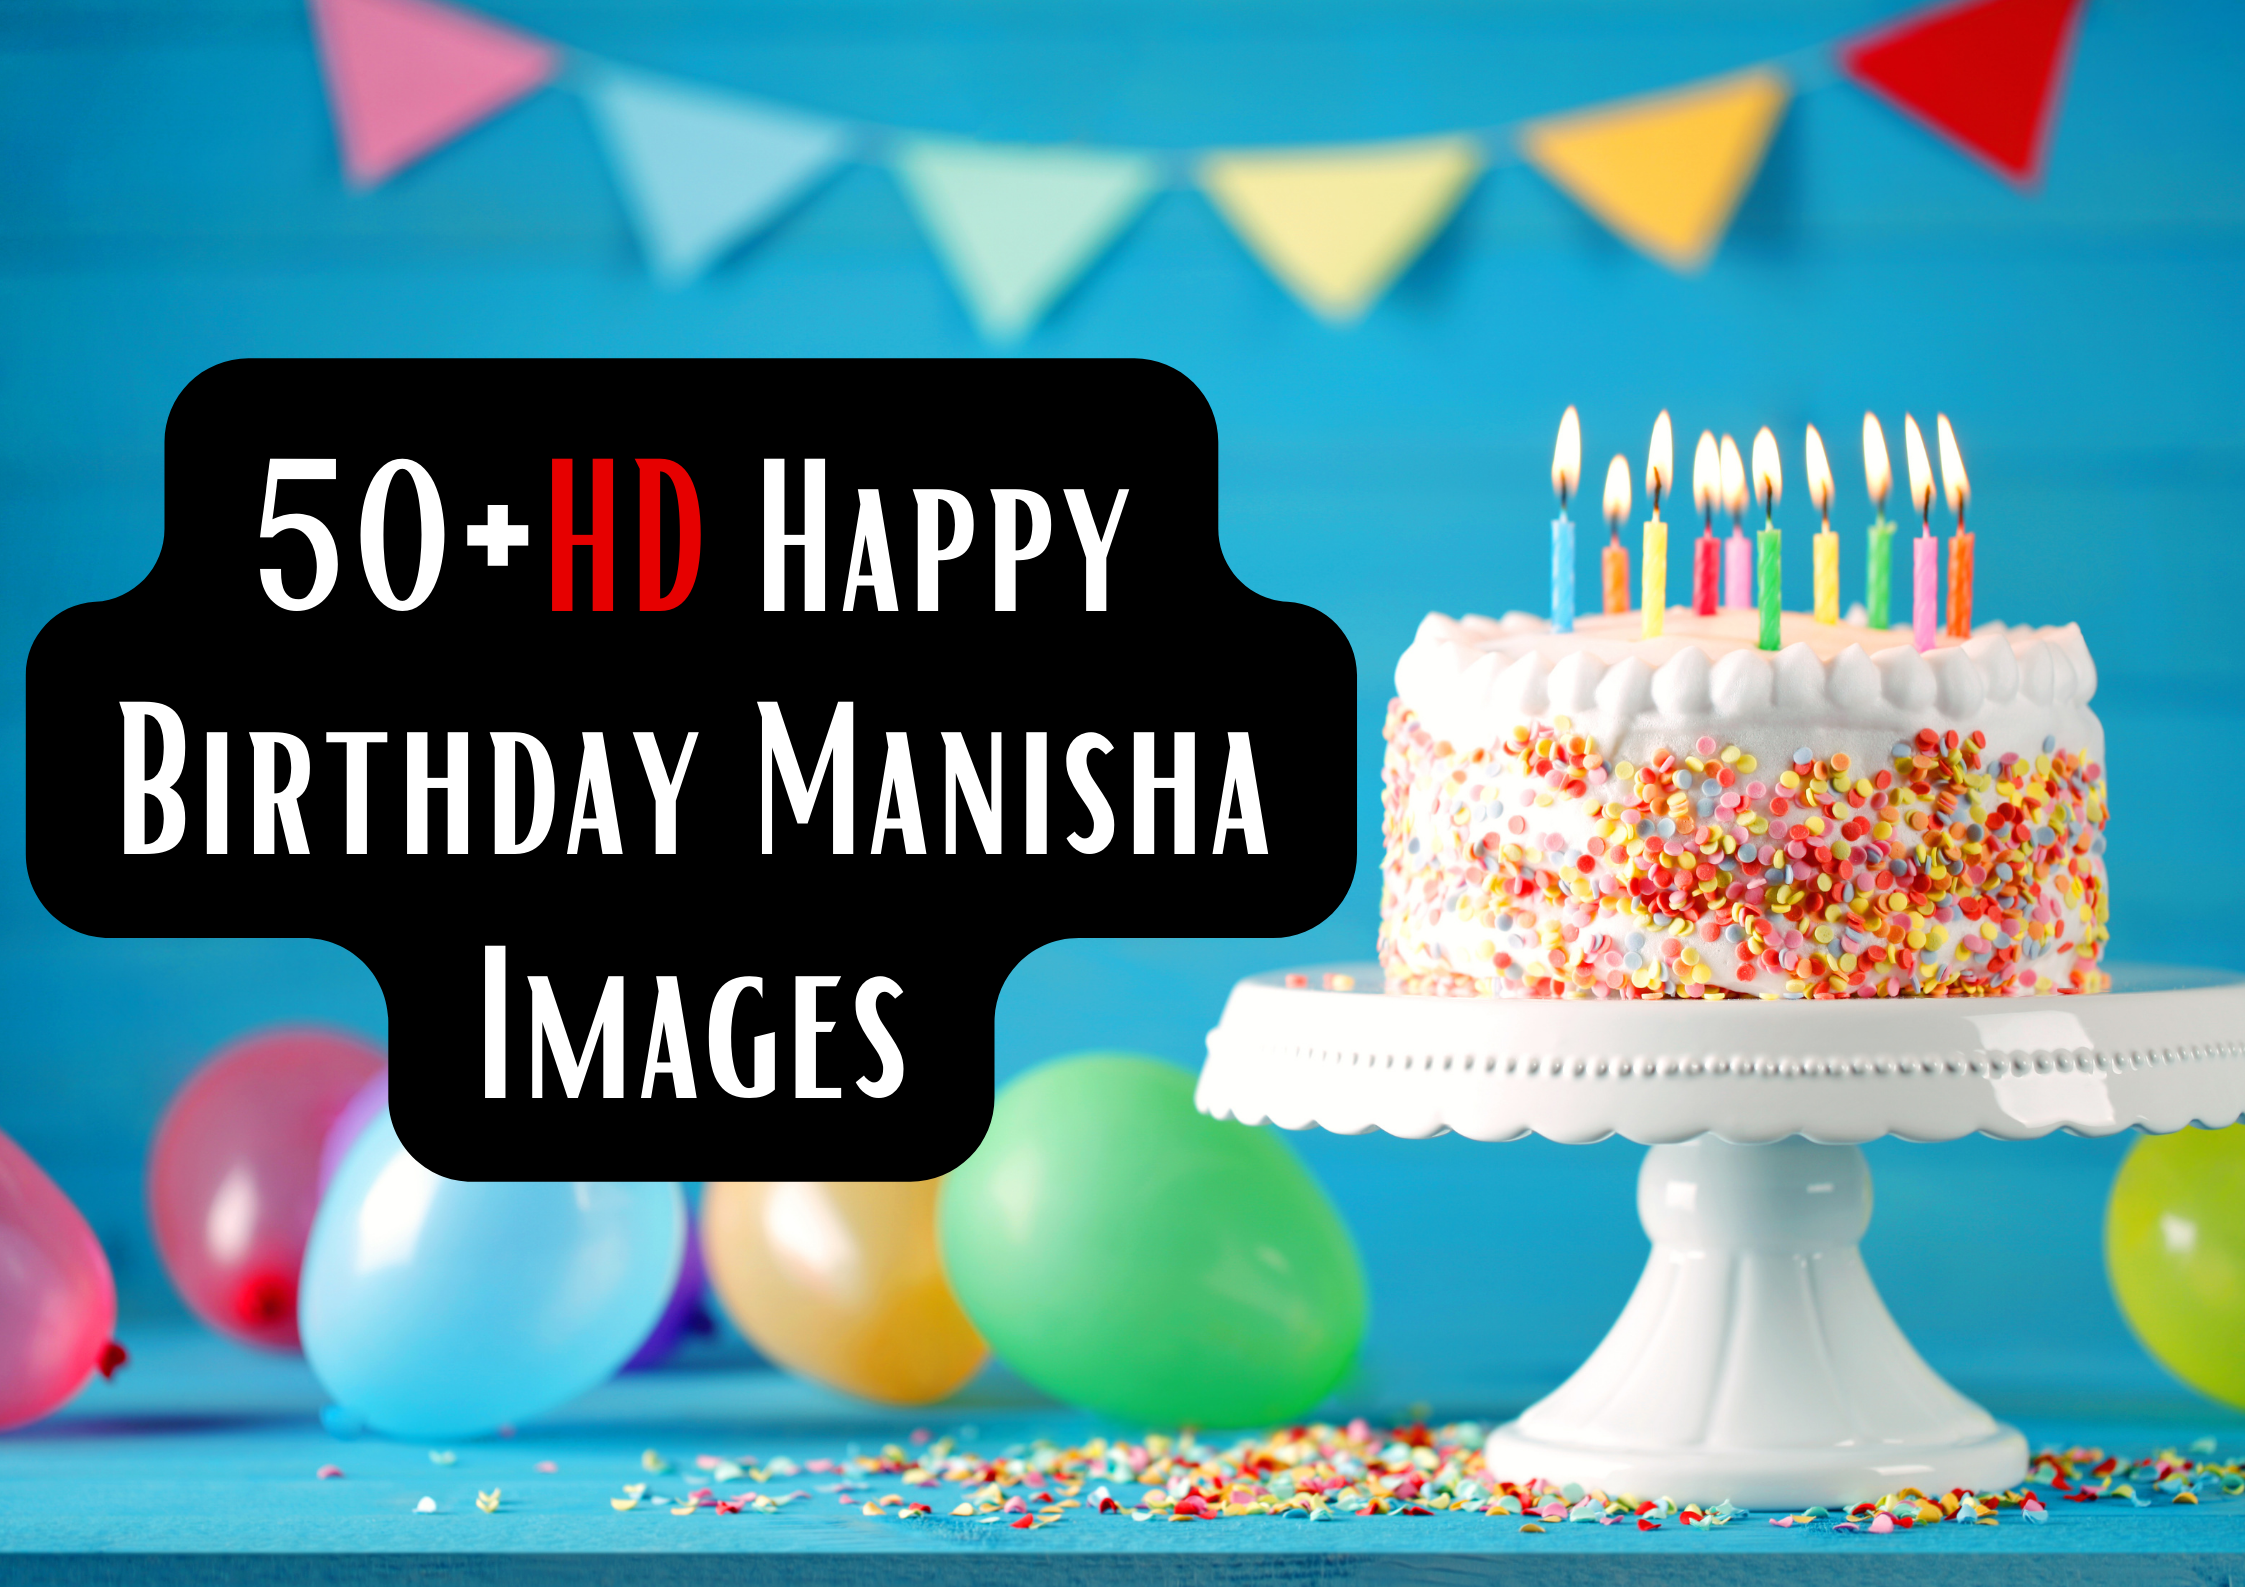 50+ HD Happy birthday Manisha Images